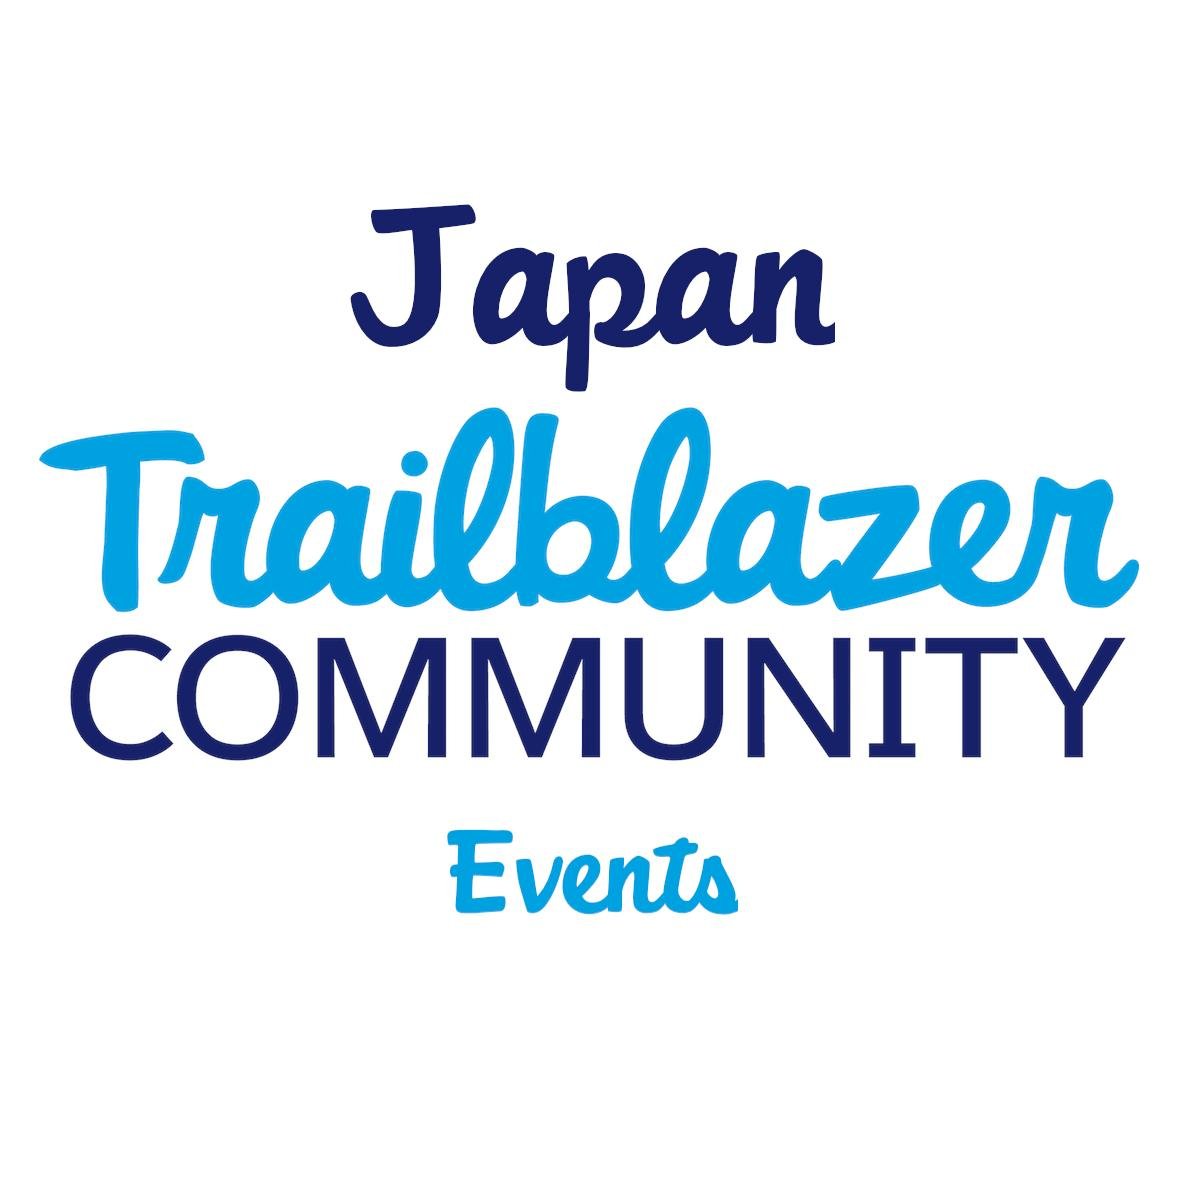 https://t.co/dYPCvqSpPX に掲載される日本のSalesforce コミュニティ主催イベントをお知らせします。